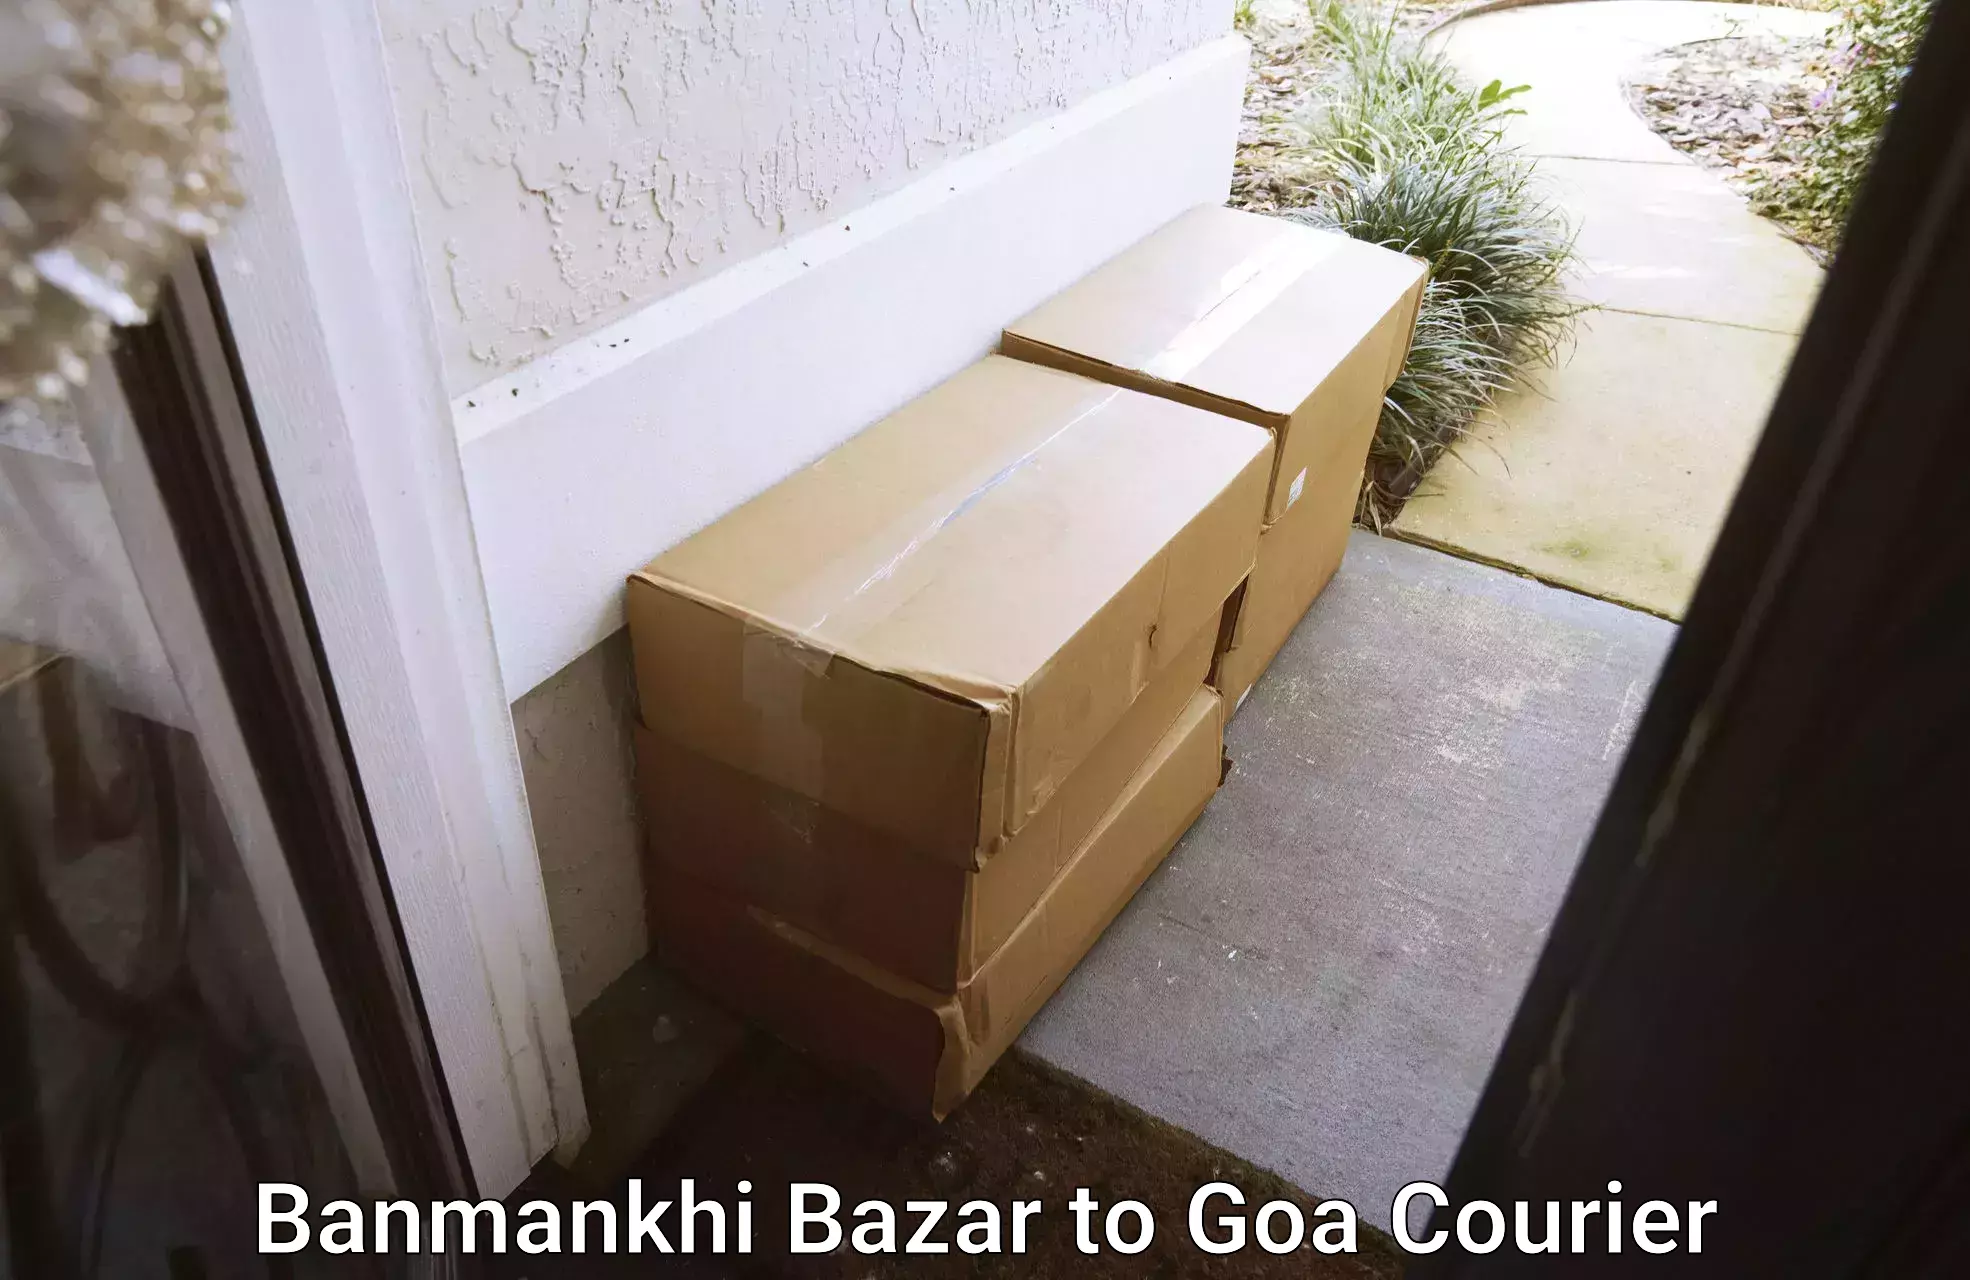 Professional moving company Banmankhi Bazar to Goa